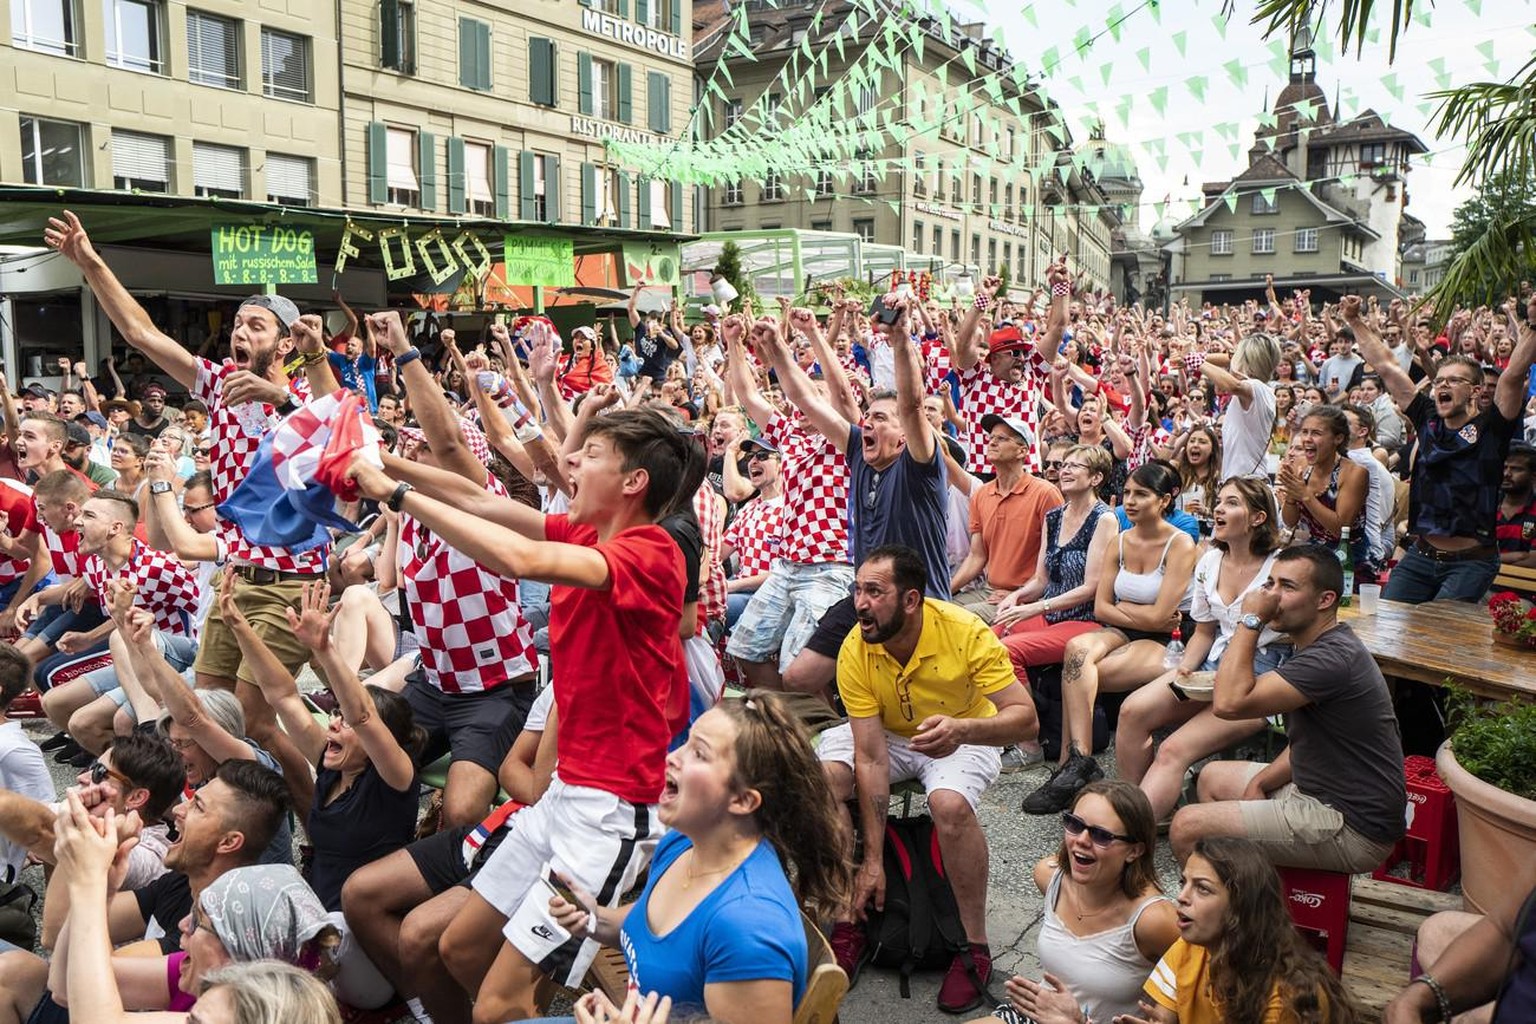 Solche Szenen wird man heuer nicht sehen: Kroatische Fans jubeln an der WM 2018 beim Public Viewing dichtgedrängt in Bern.